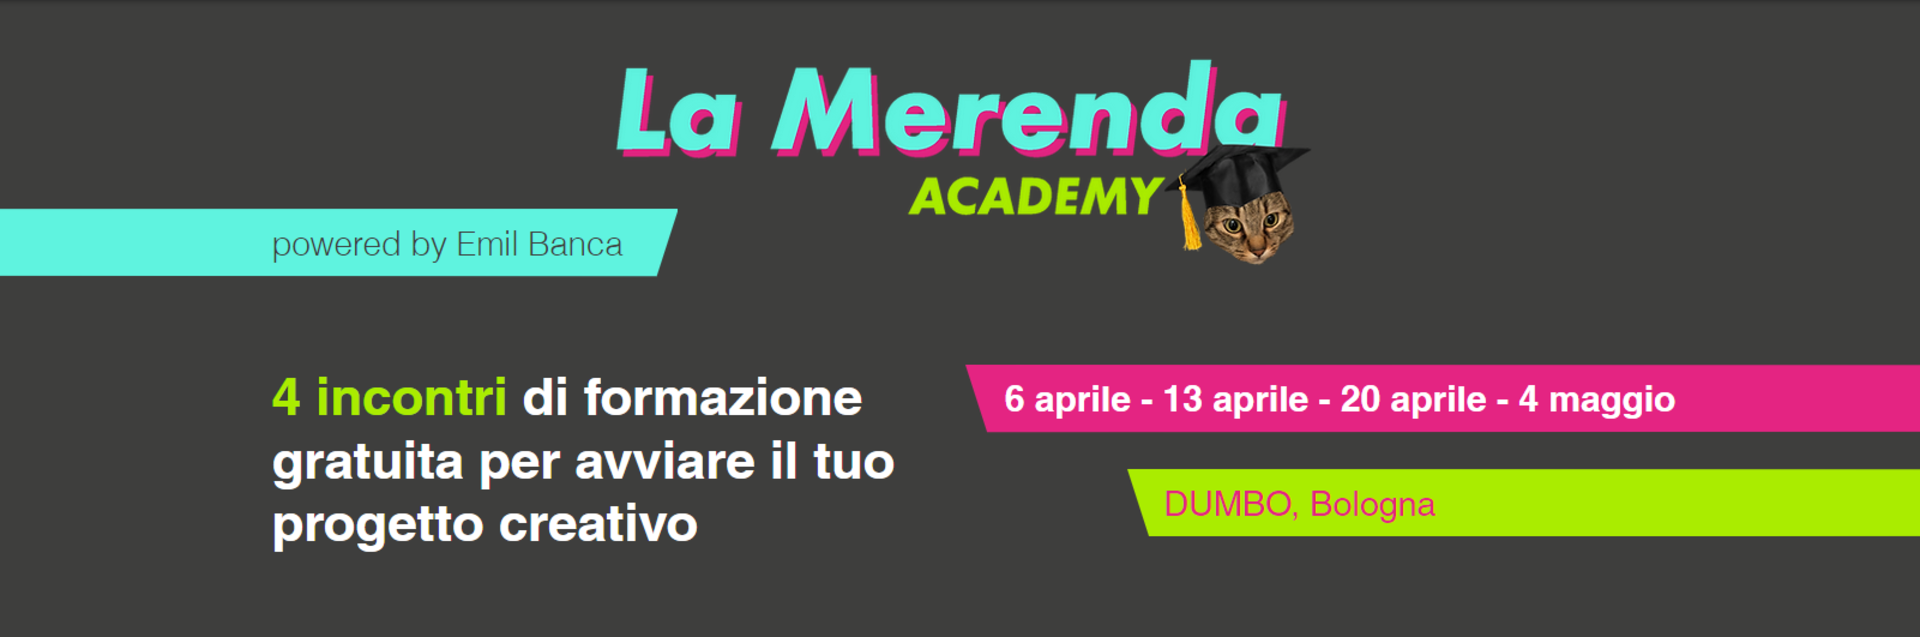 La Merenda Academy